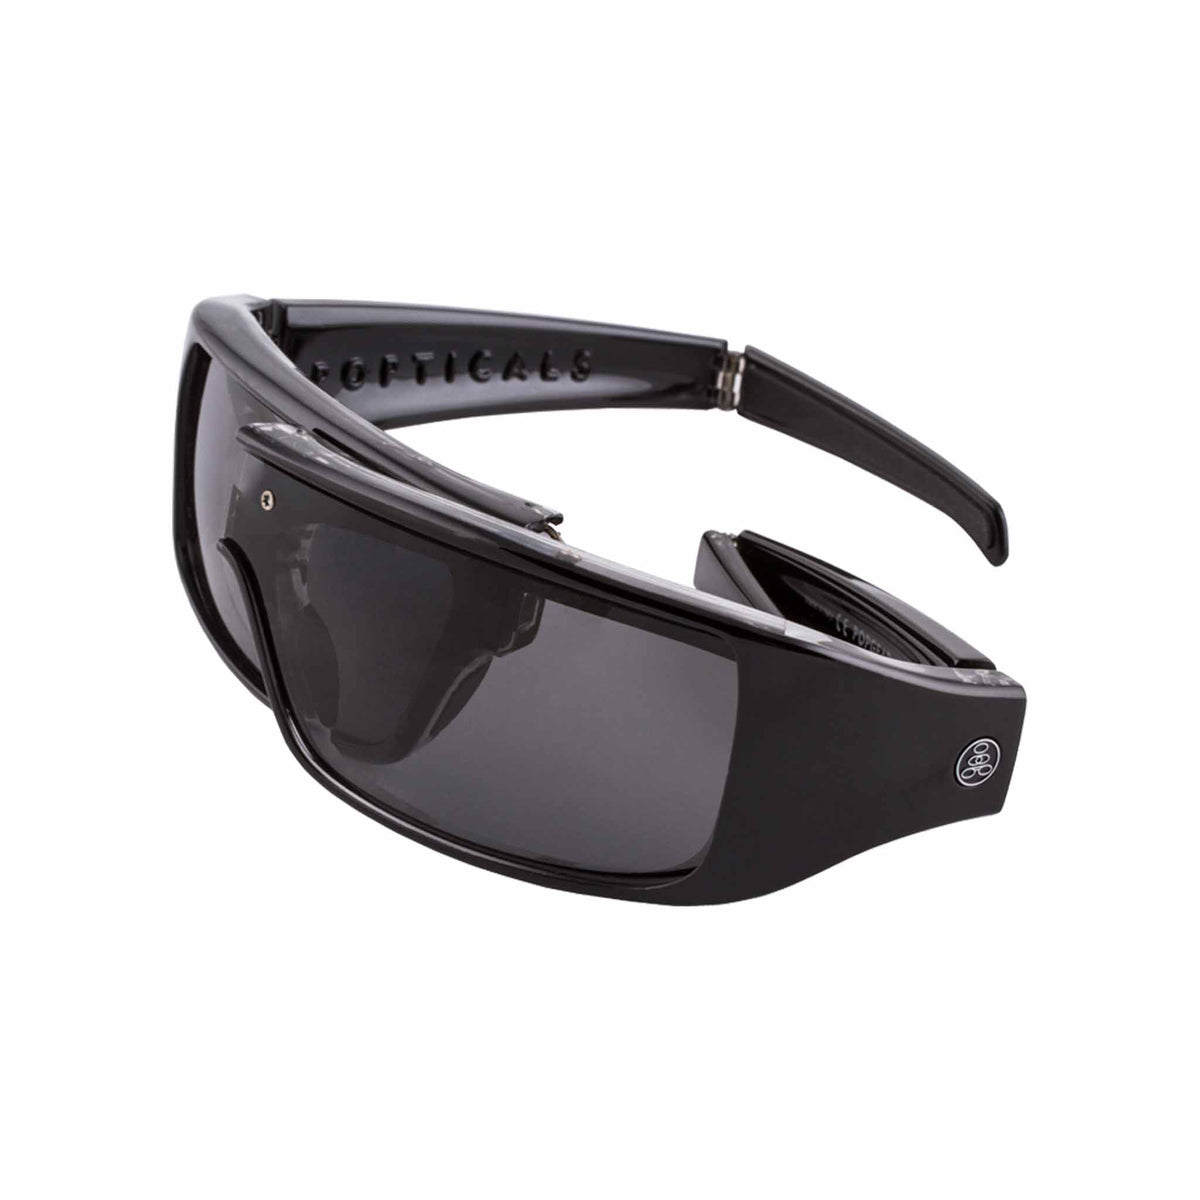 Popticals, Premium Compact Sunglasses, PopGear, 040050-BLGP, Polarized Sunglasses, Gloss Black over Crystal Frame , Gray Lenses, Spider View